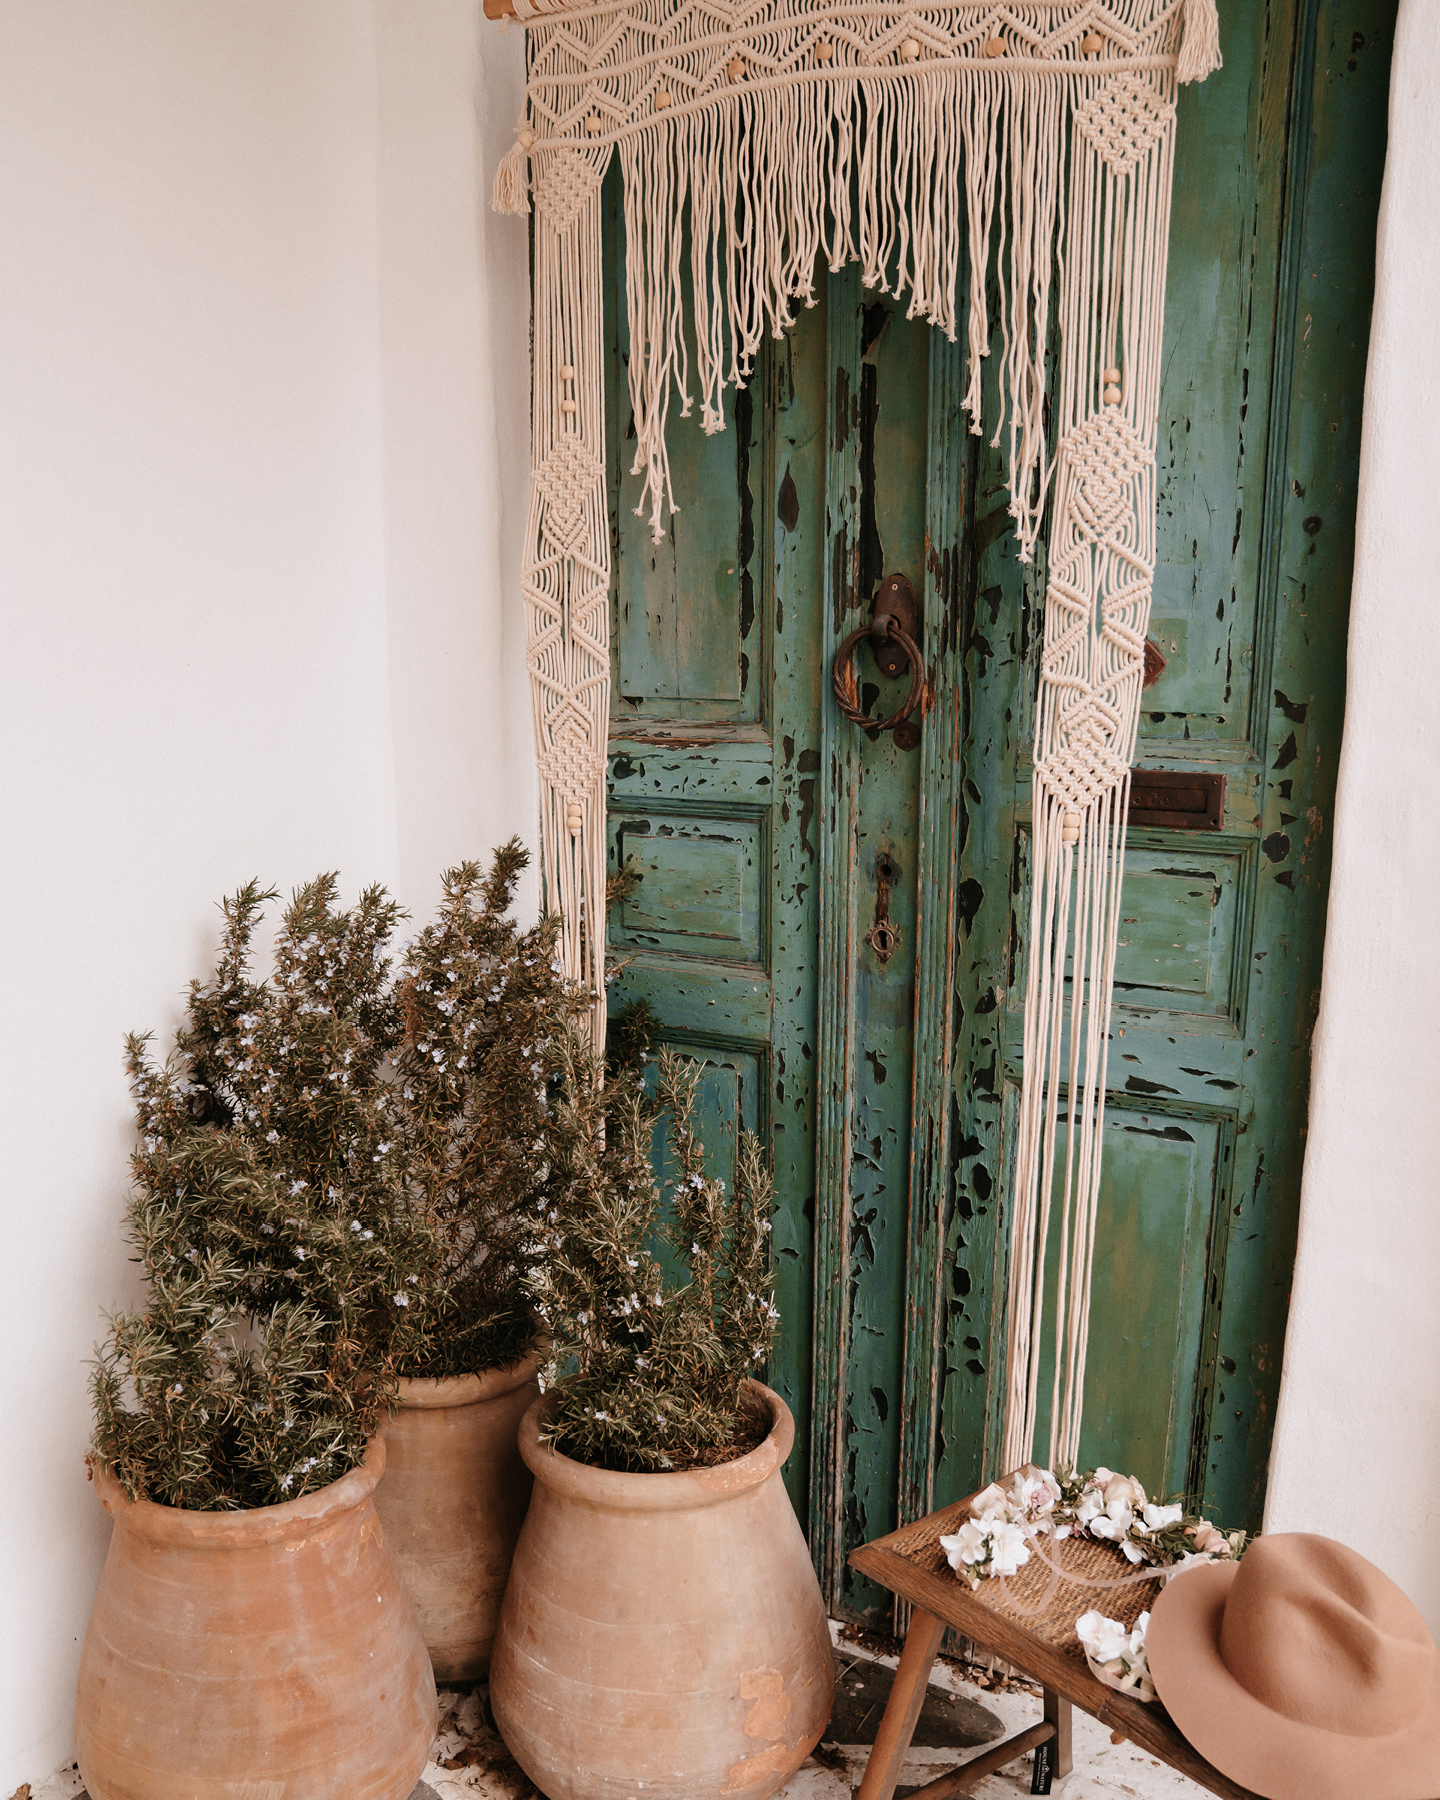 Aufwändig geknotete Makramee Boho Dekoration hängt an grüner Tür.